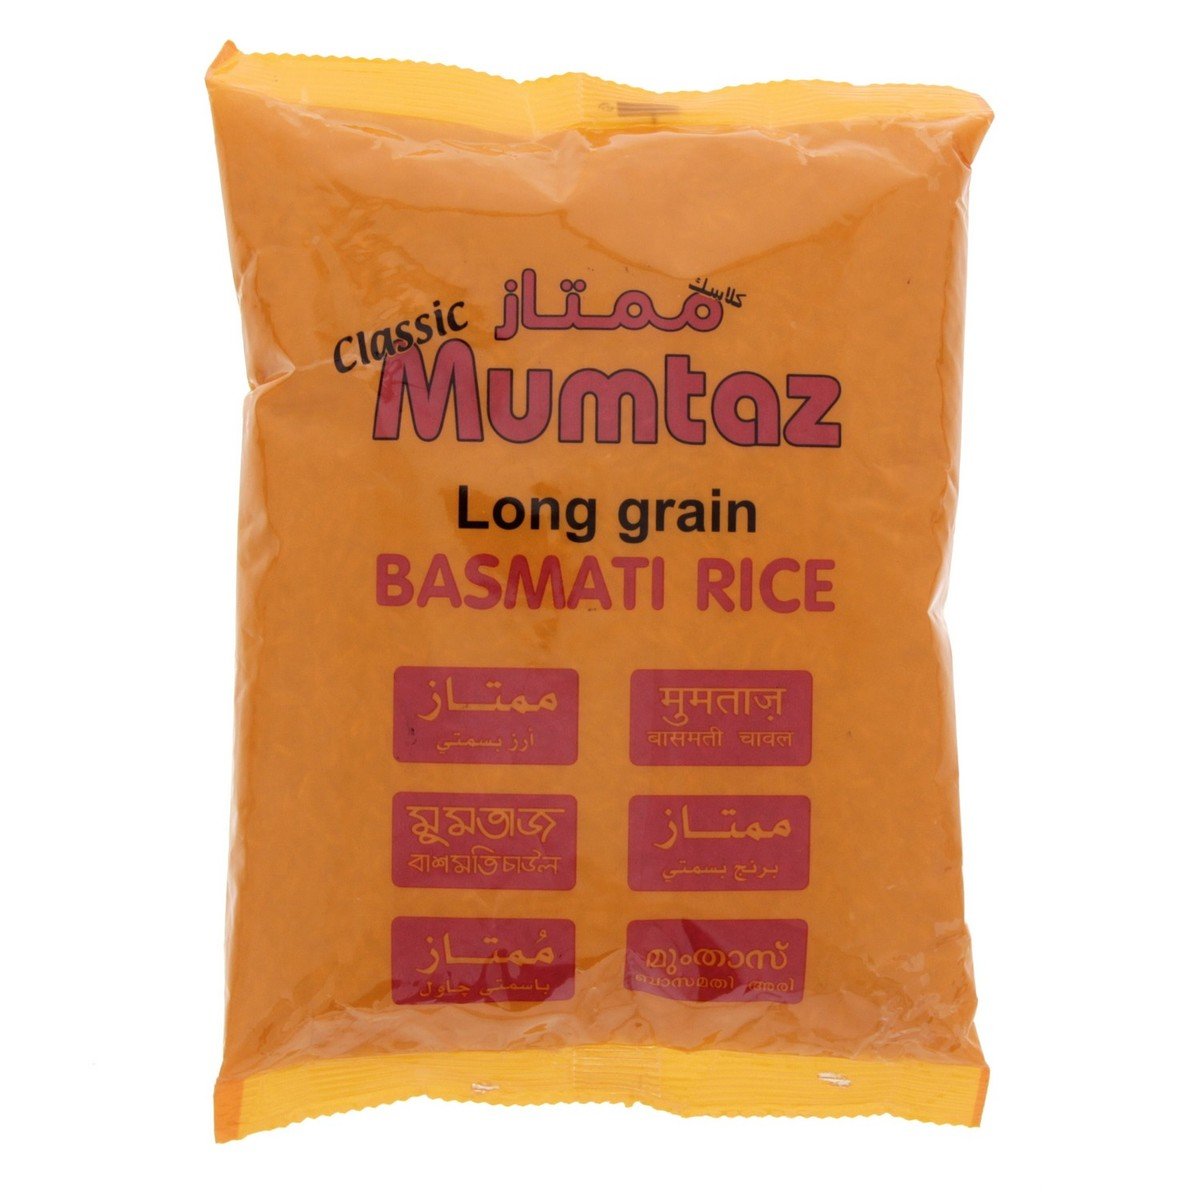 Mumtas Classic Long Grain Basmati Rice 1 kg